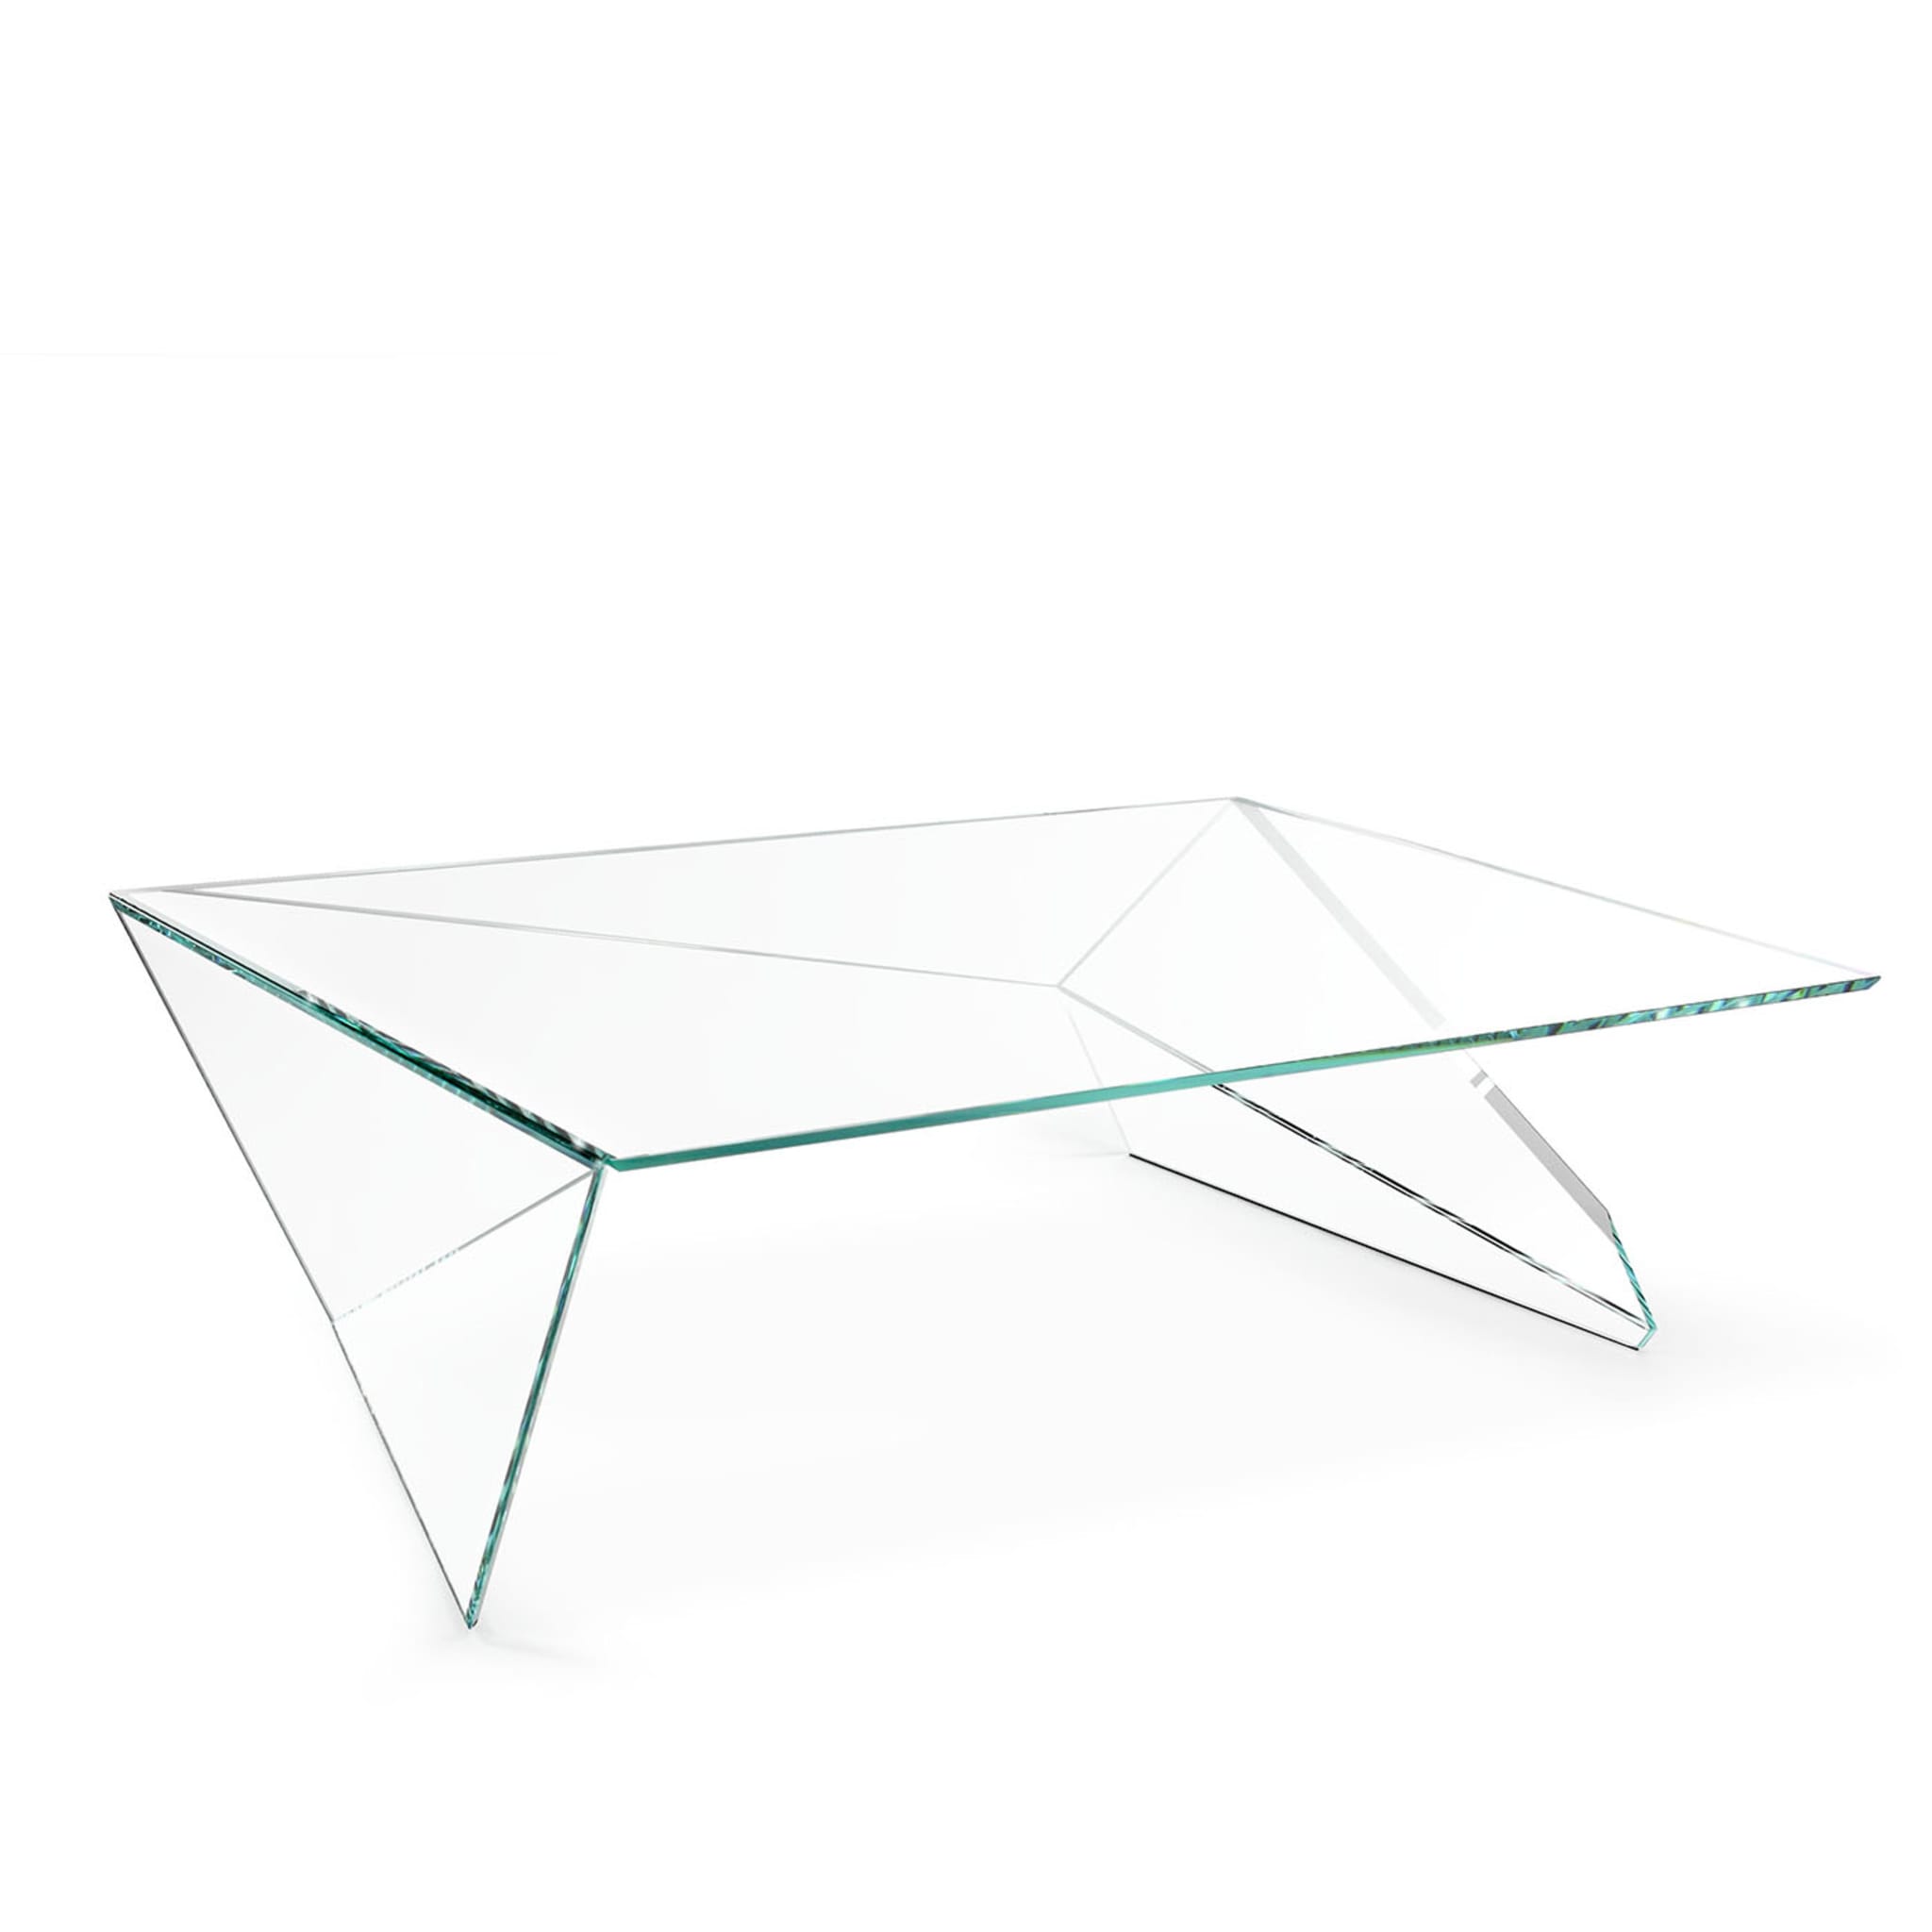 Origami Square Coffee Table - Alternative view 1